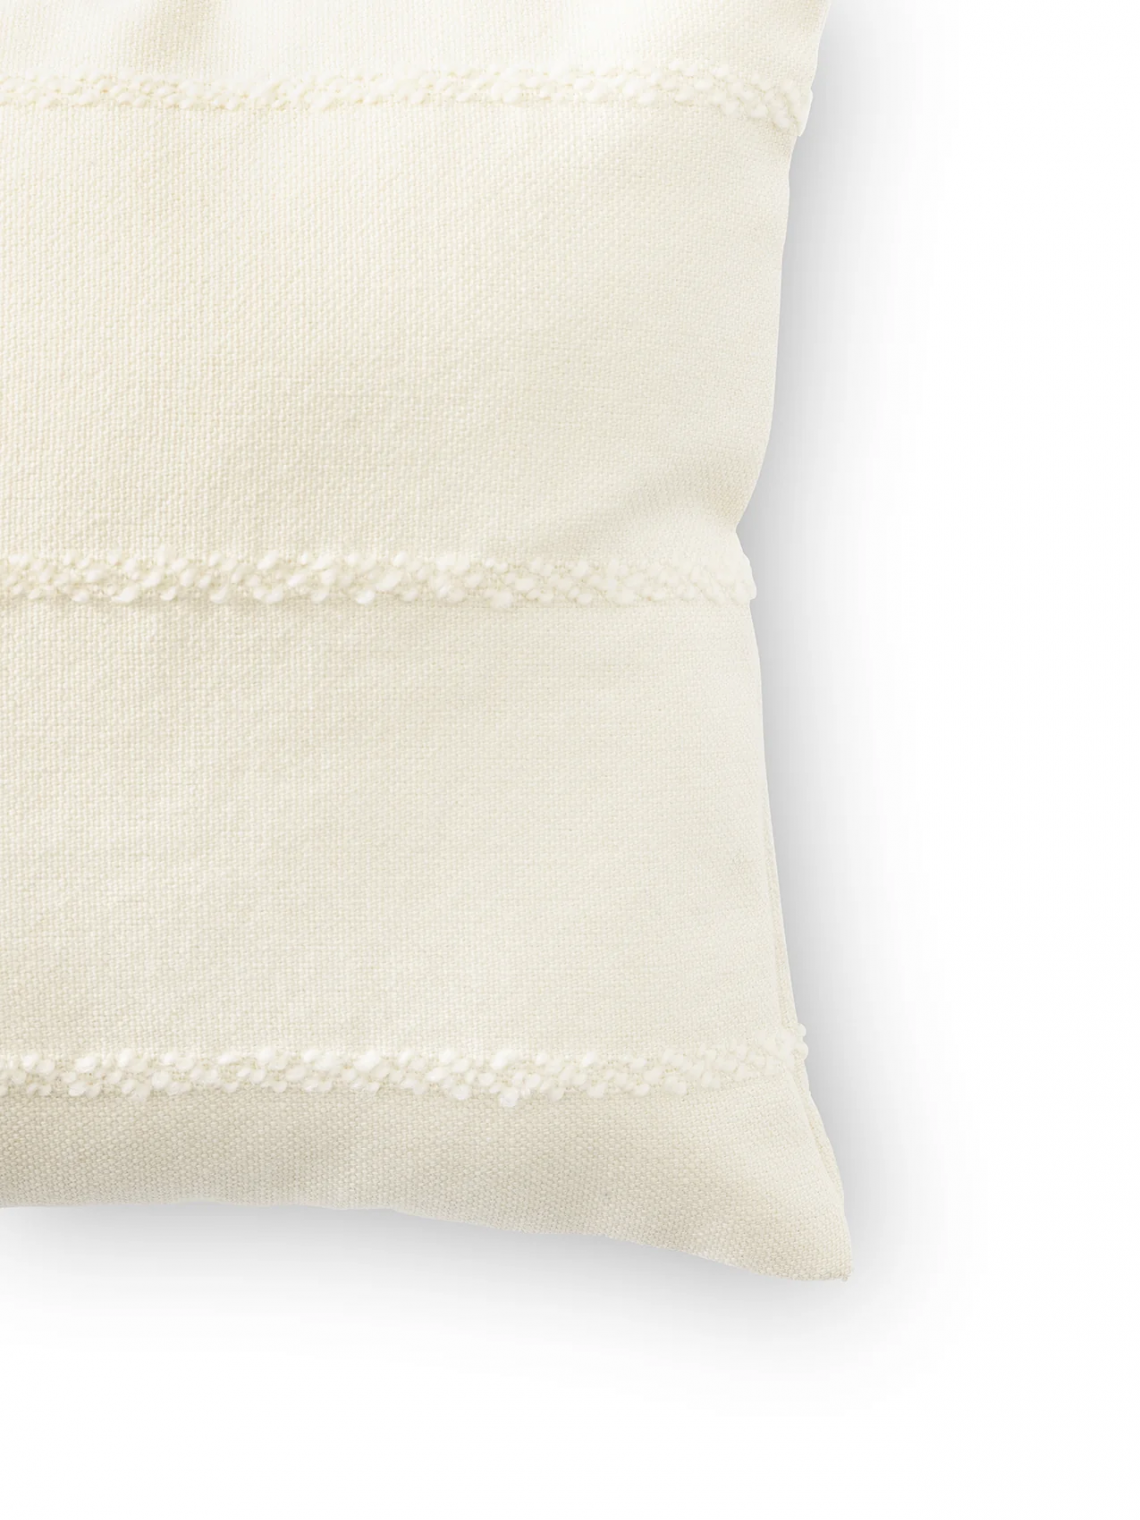 Losaria Pillow抱枕细节图14